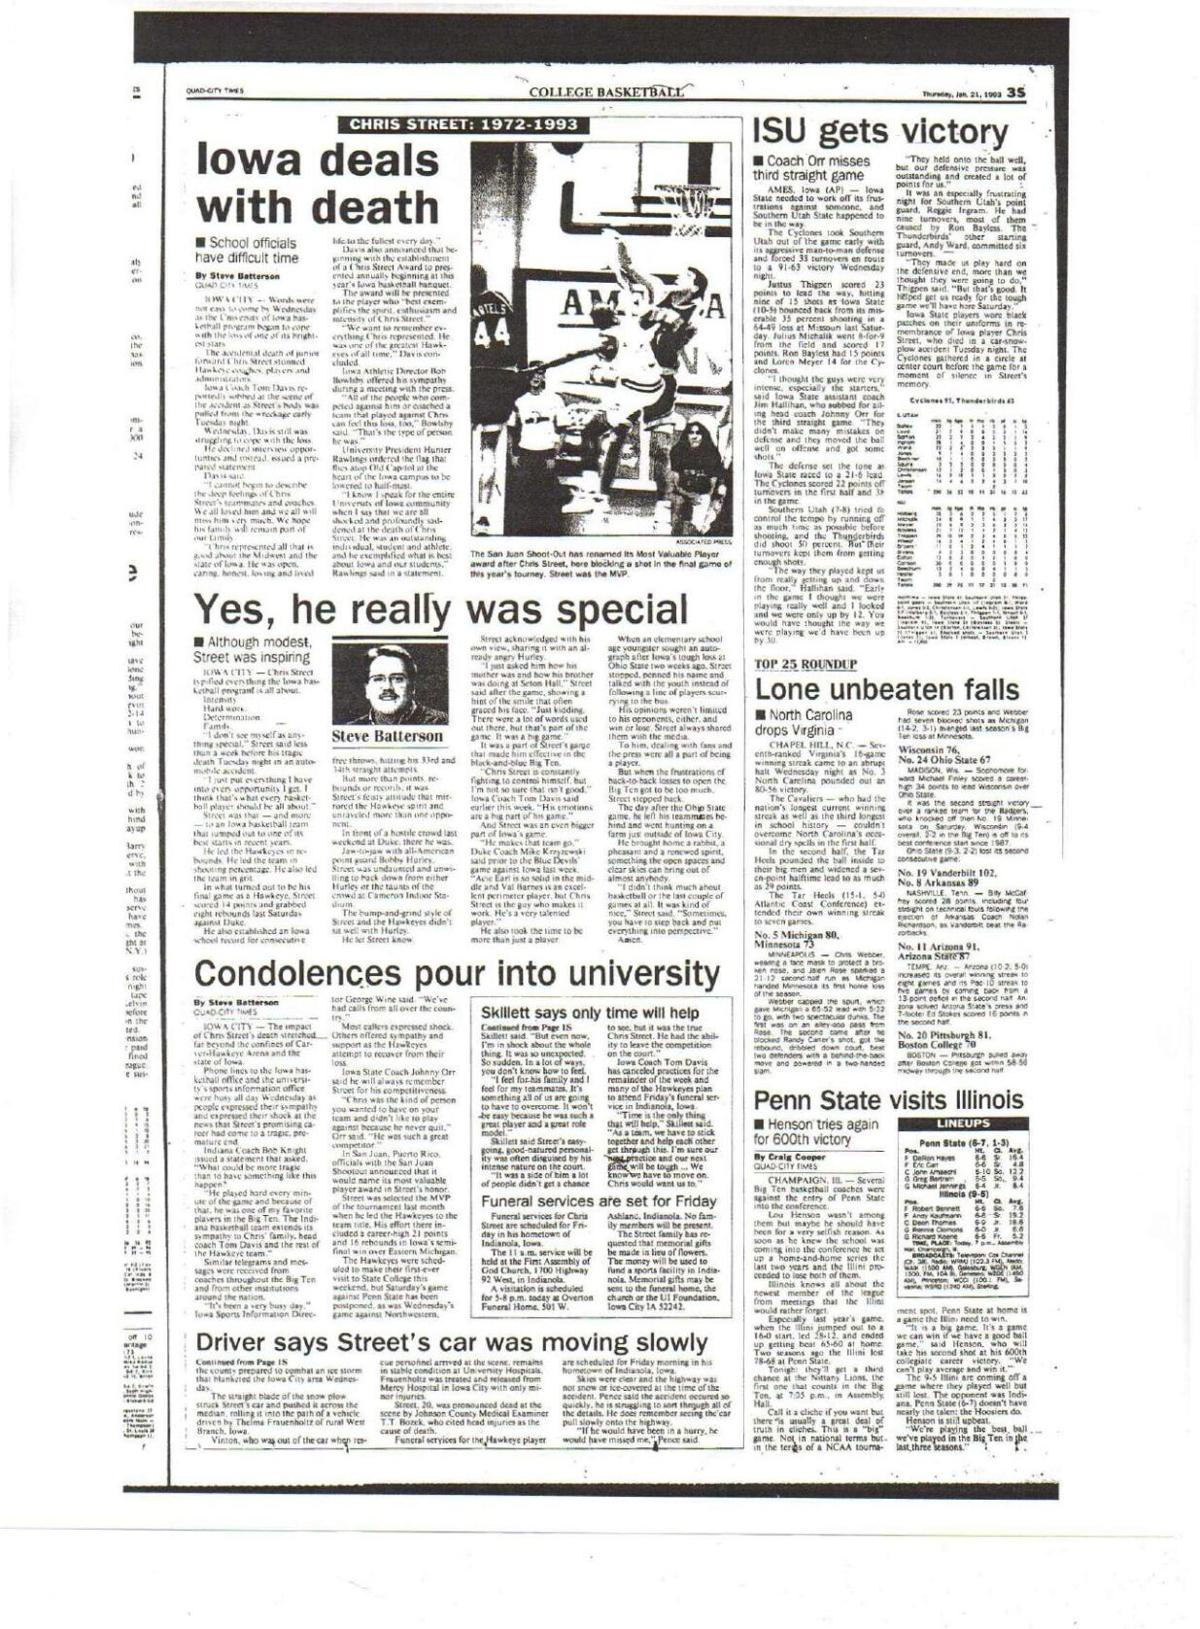 Jan. 21, 1993 Quad-City Times inside page